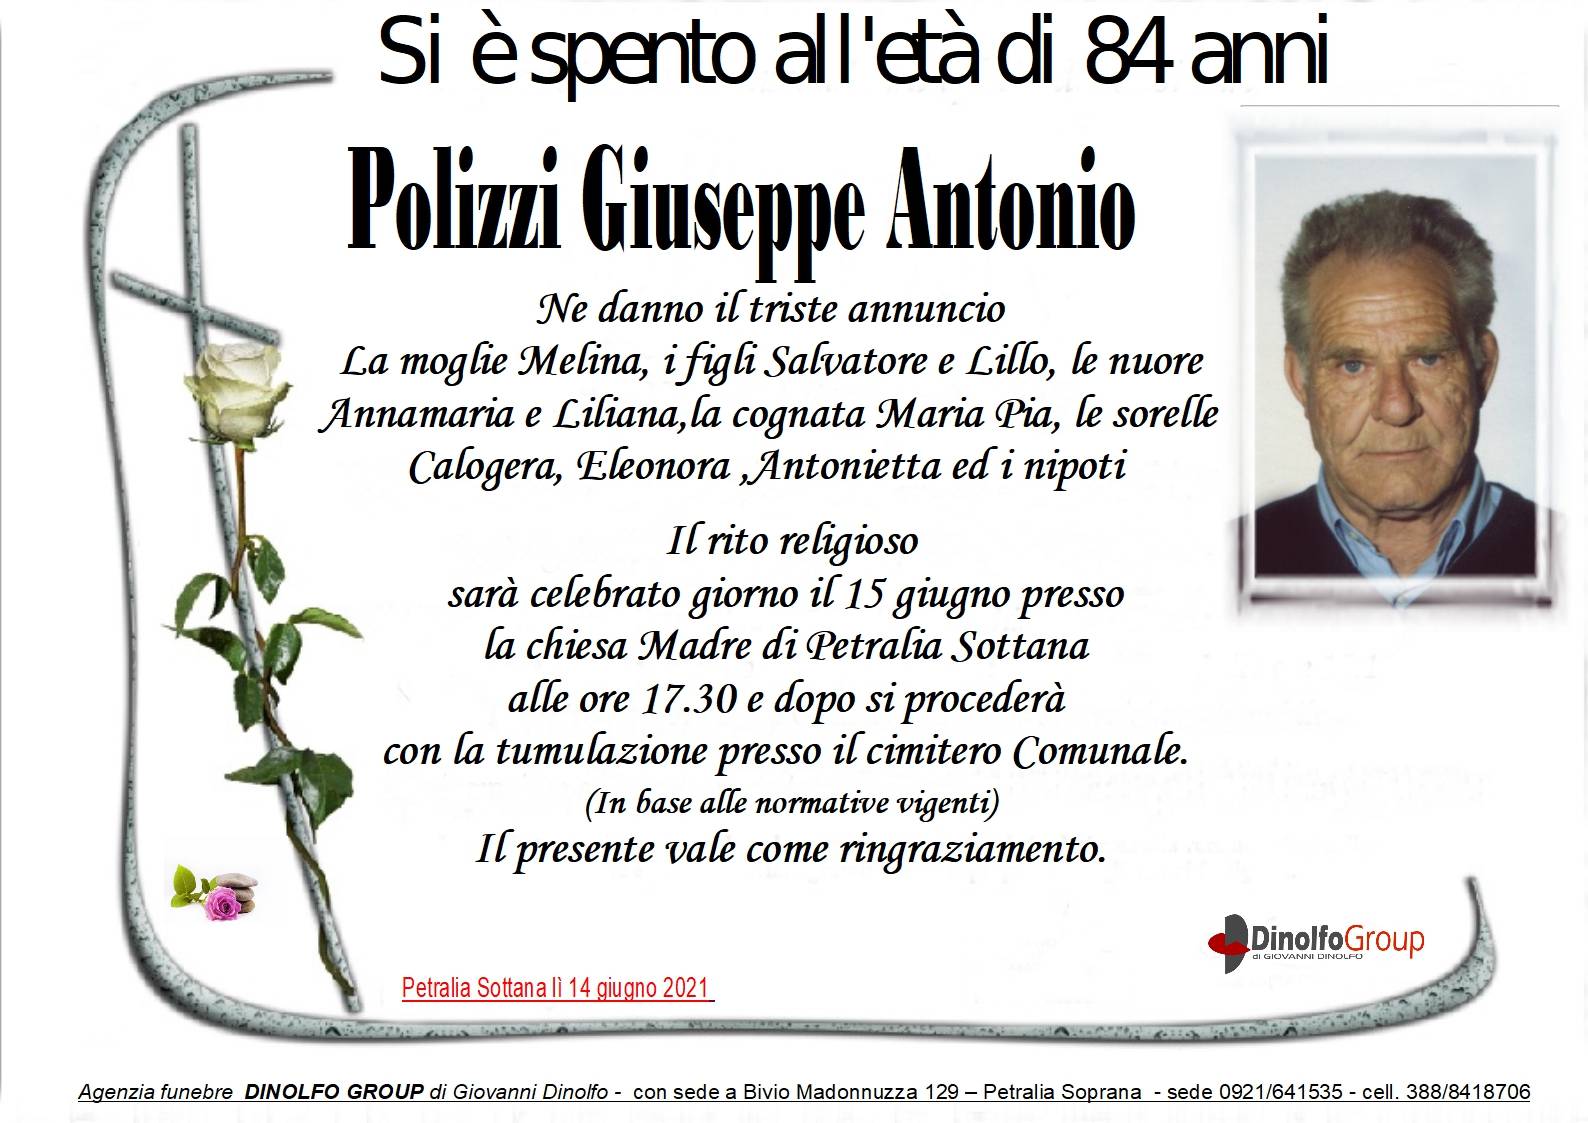 Giuseppe Antonio Polizzi